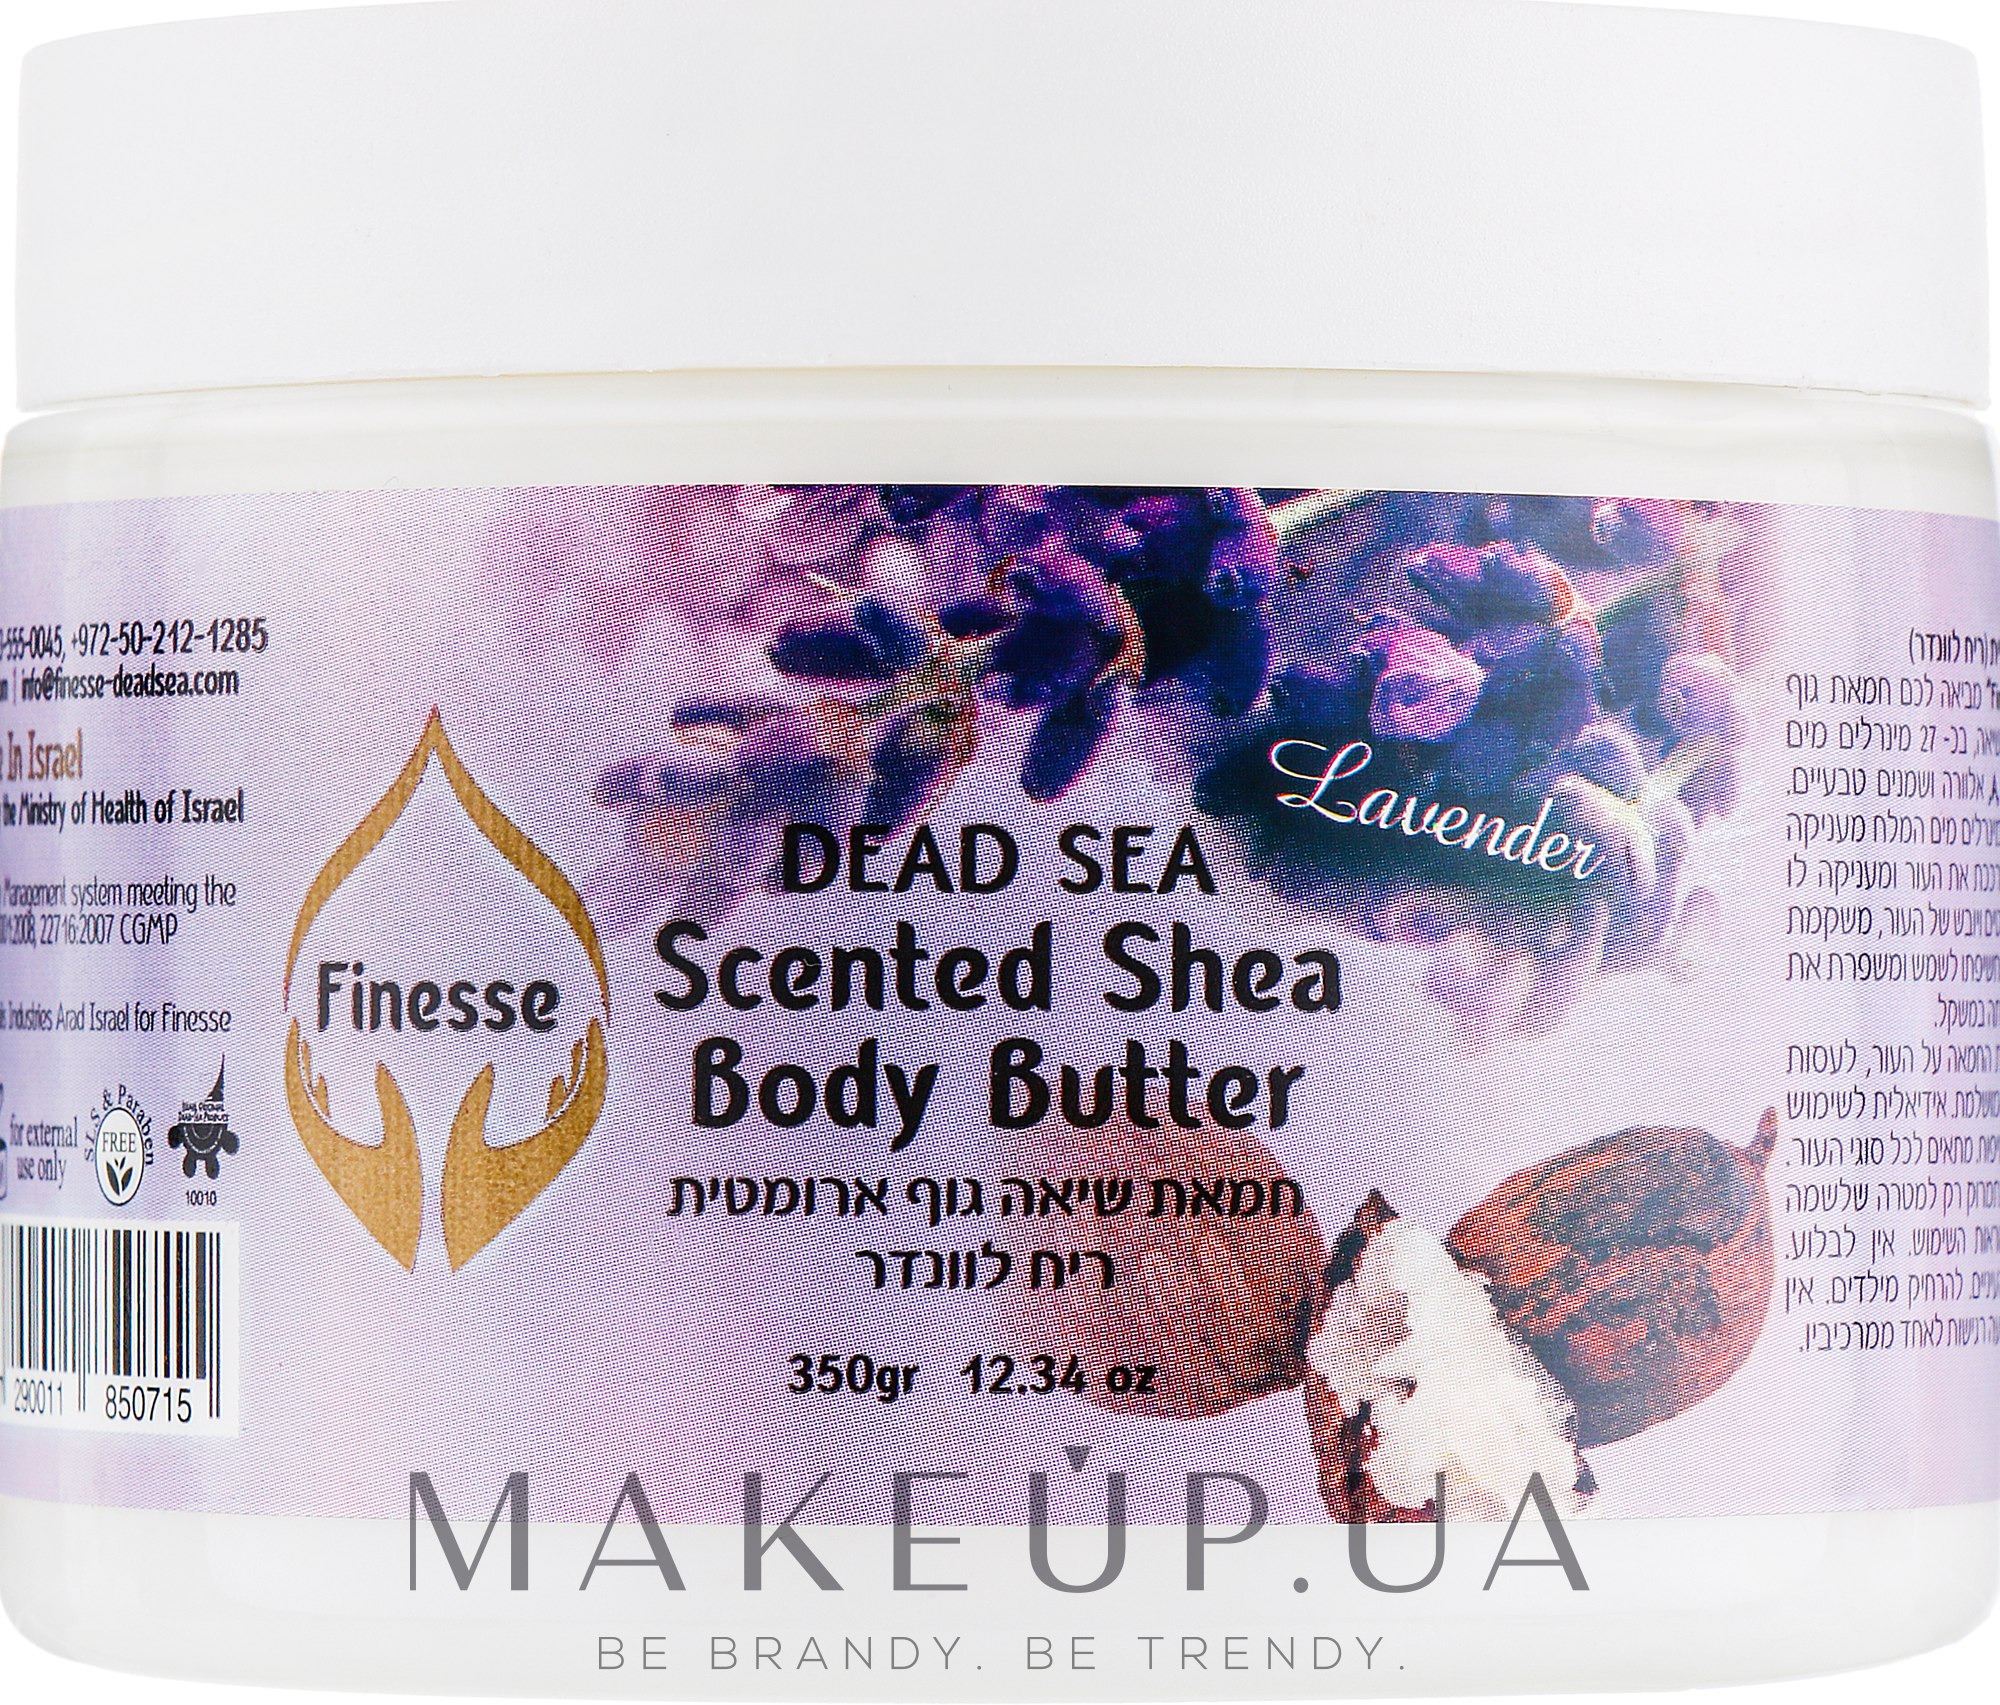 Масло для тіла "Весна" на оаснові горіха ши  - Finesse Dead Sea Scented Shea Body Butter — фото 350g